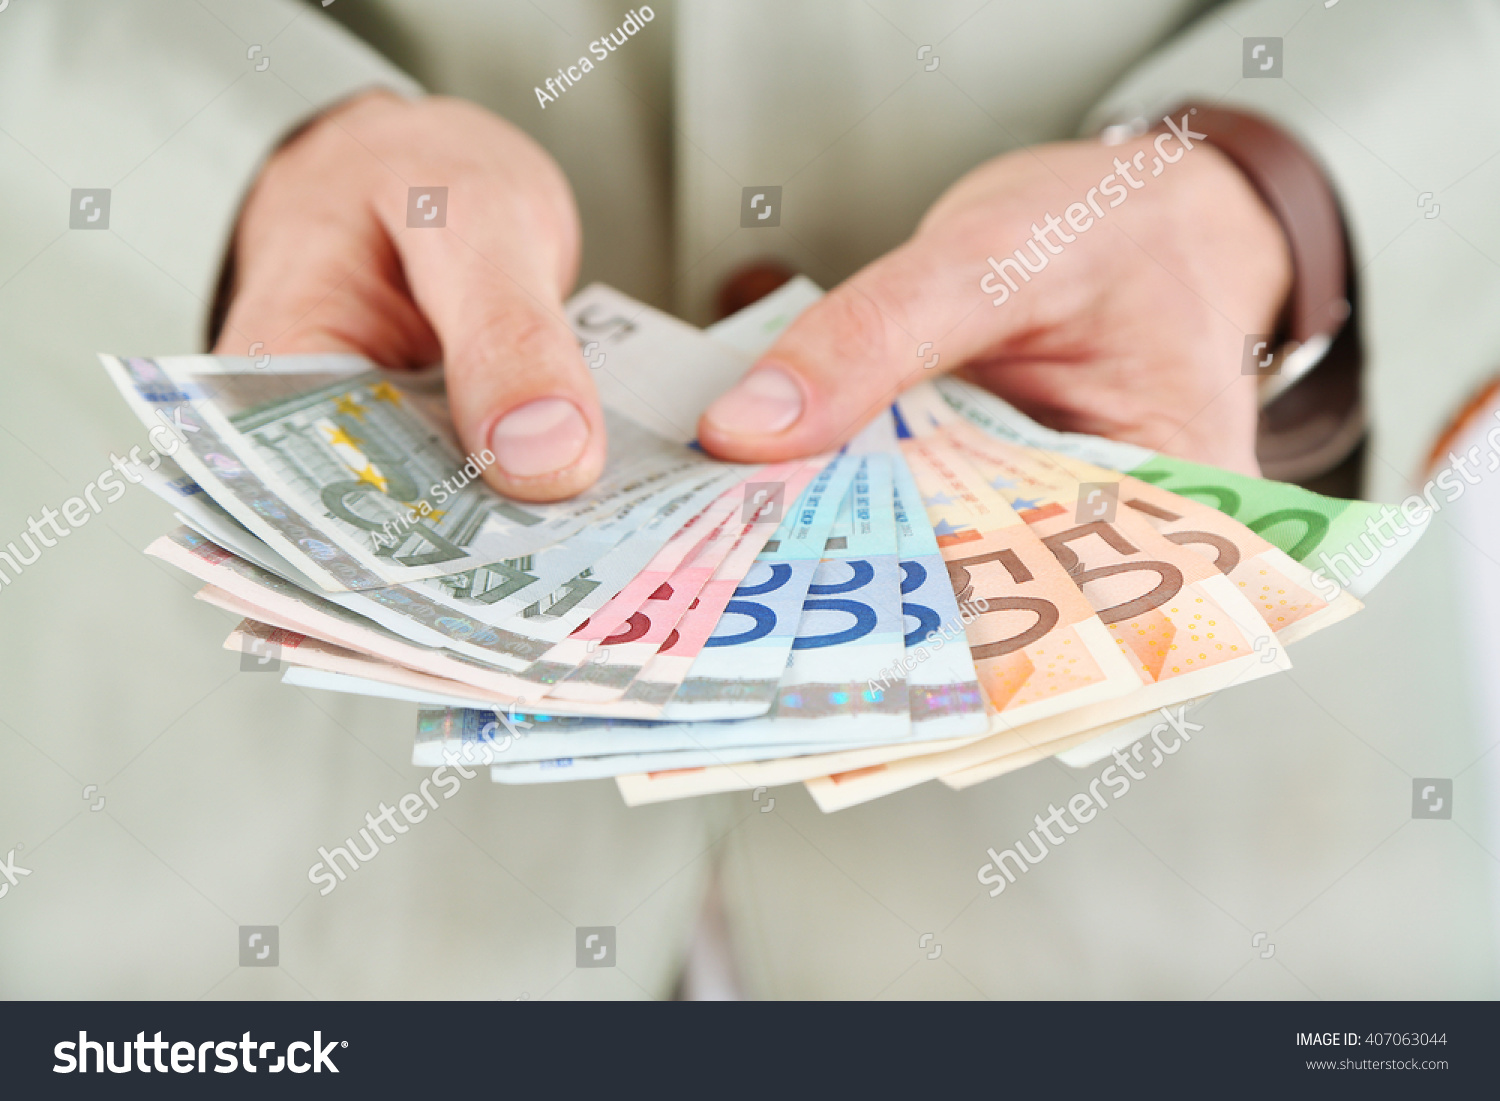 Male hands holding euros closeup #407063044